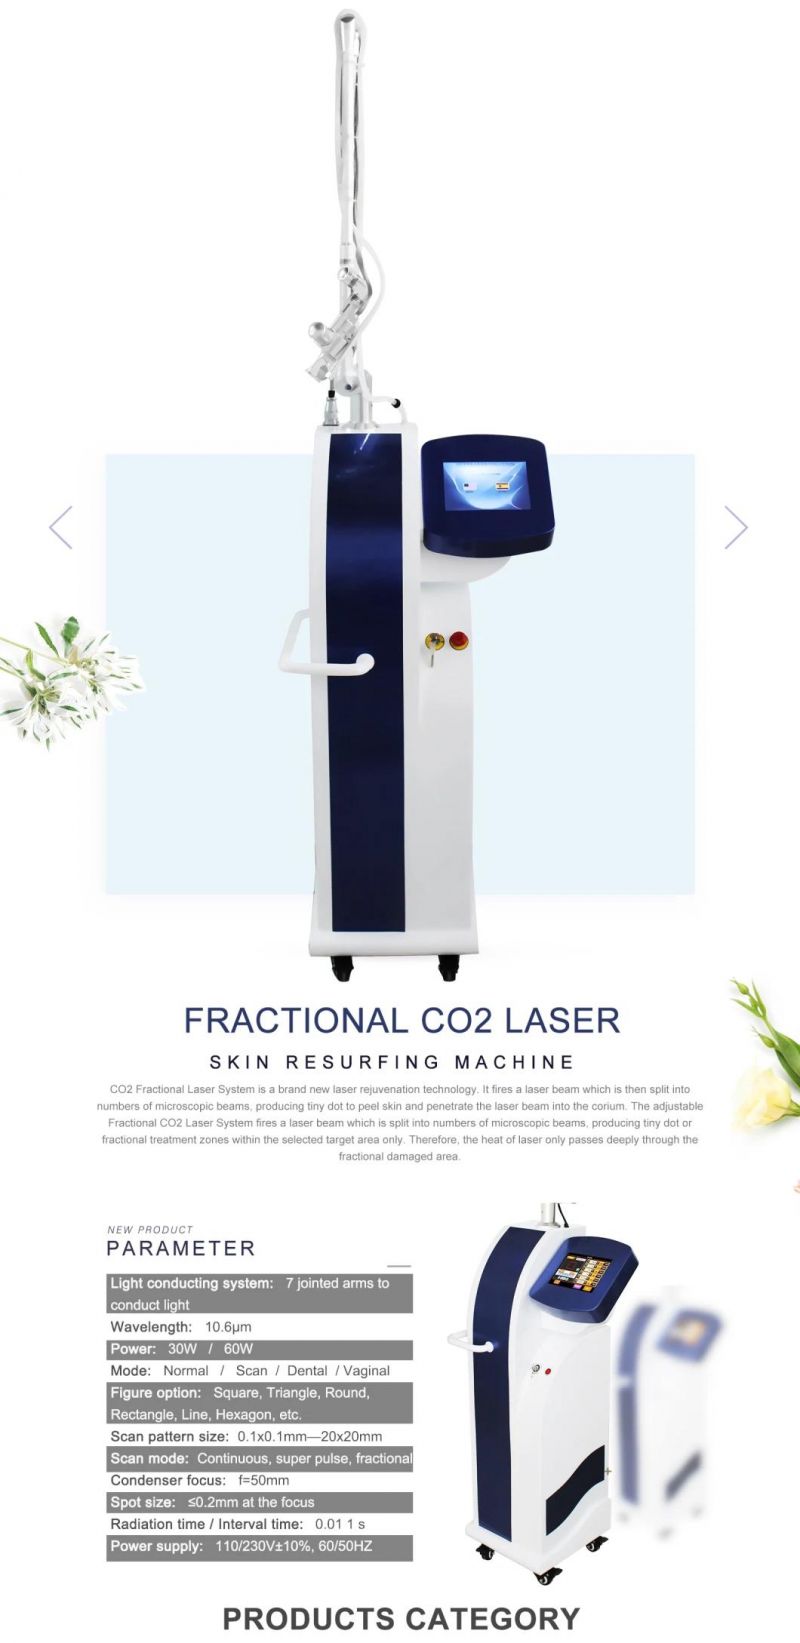 Vca Laser CO2 Laser for Acne Scar Removal